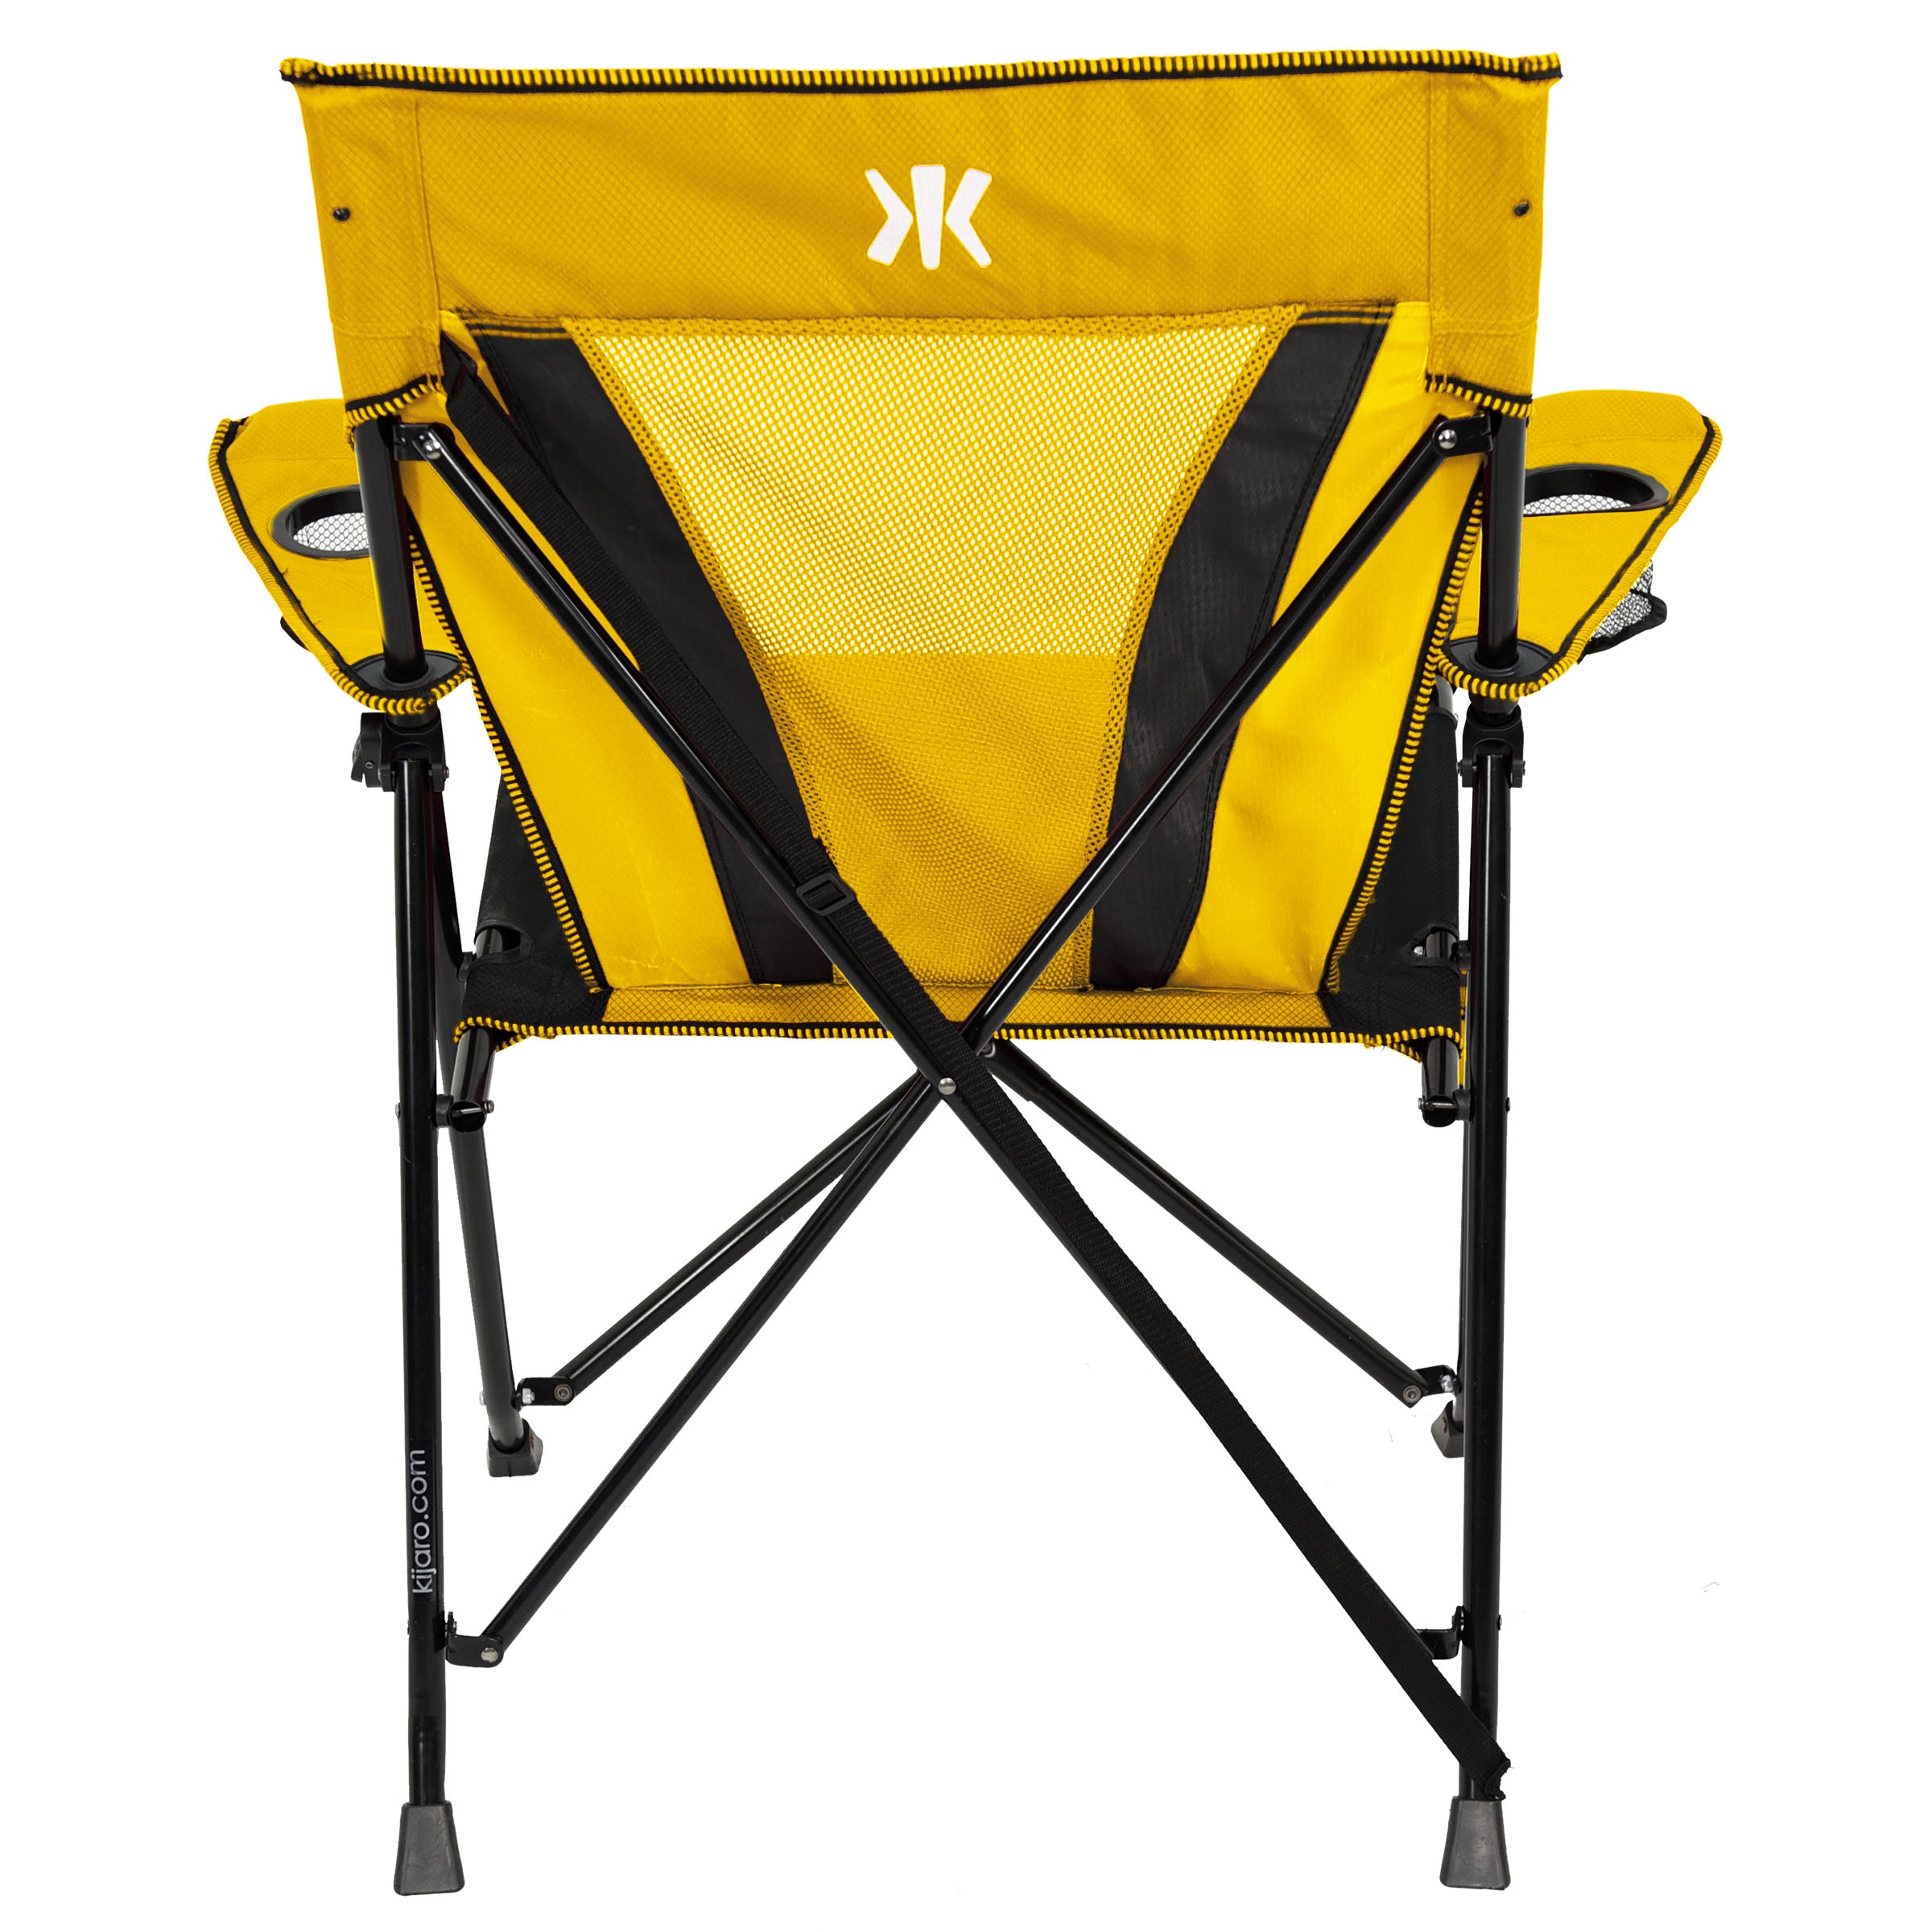 Dual Lock® XXL Chair - 400 lb Weight Capacity